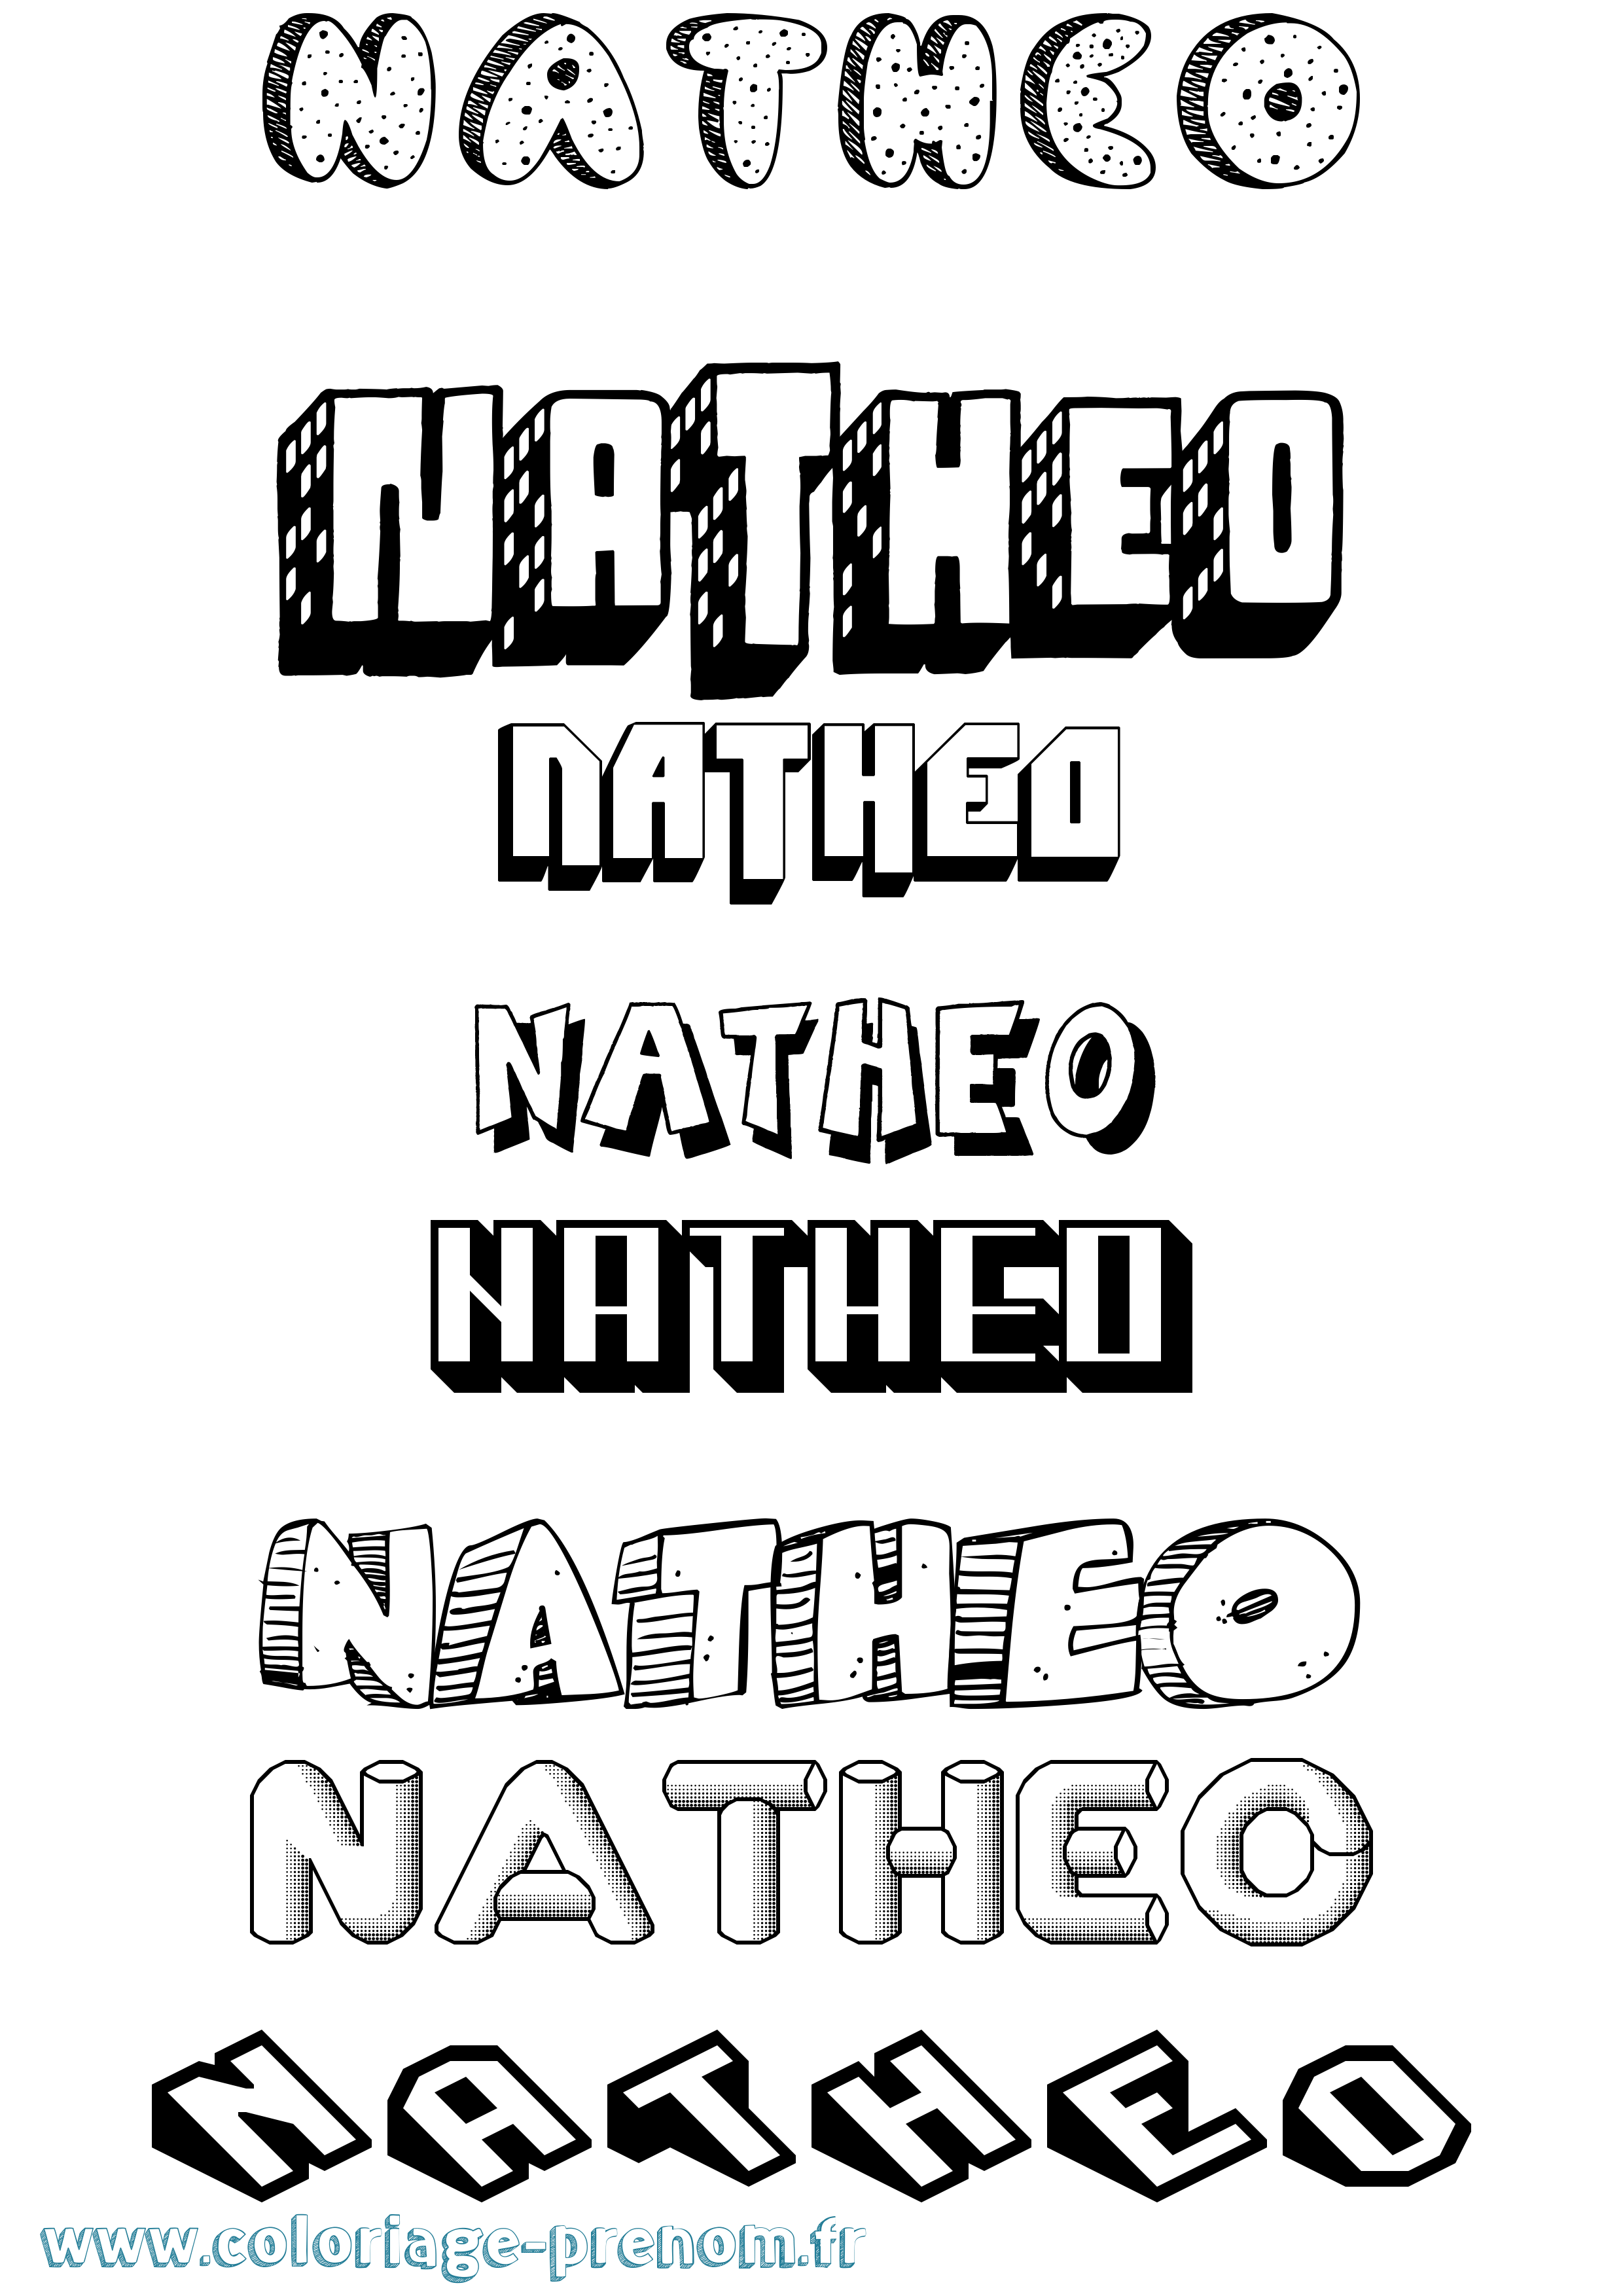 Coloriage prénom Natheo Effet 3D